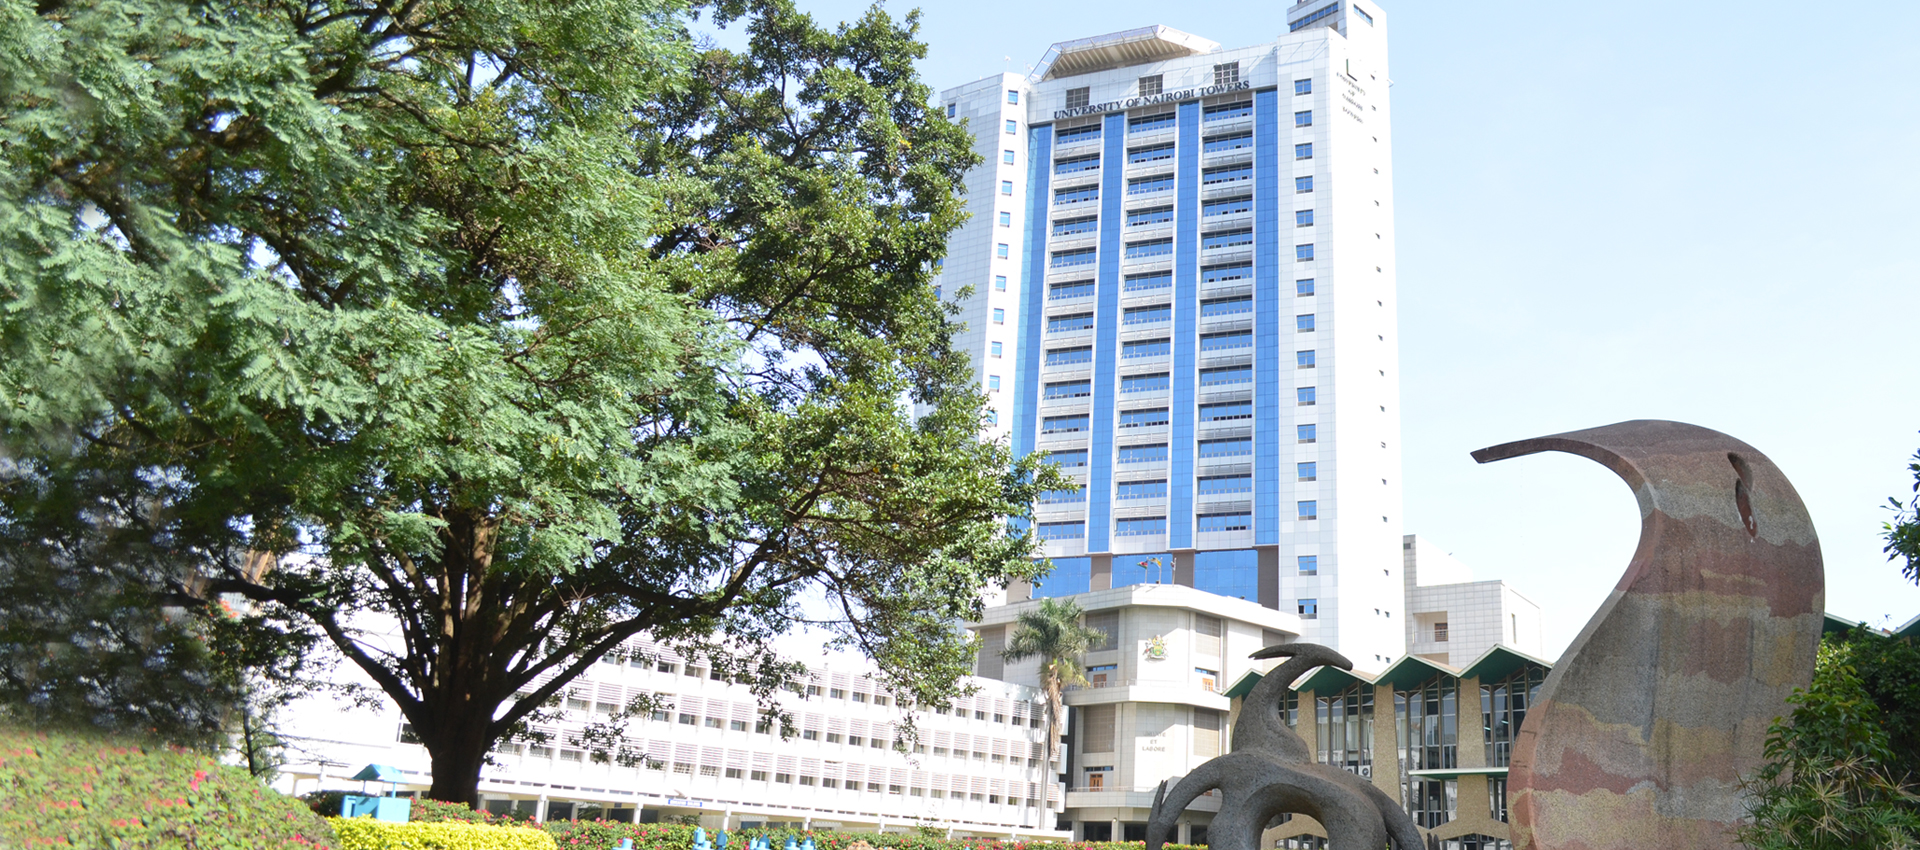 IDS | University of Nairobi Overview